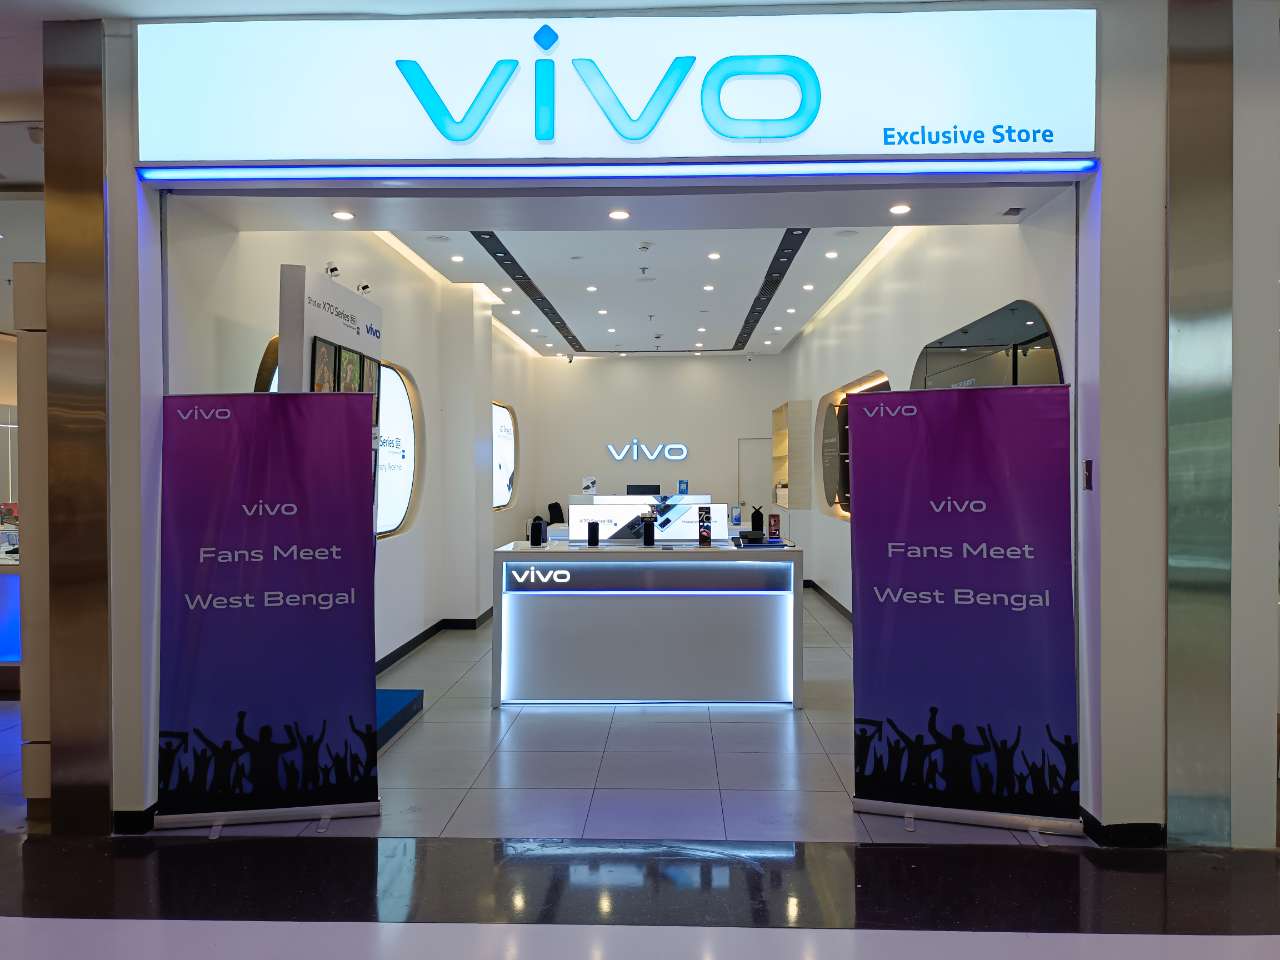 vivo brand exclusive store - 5